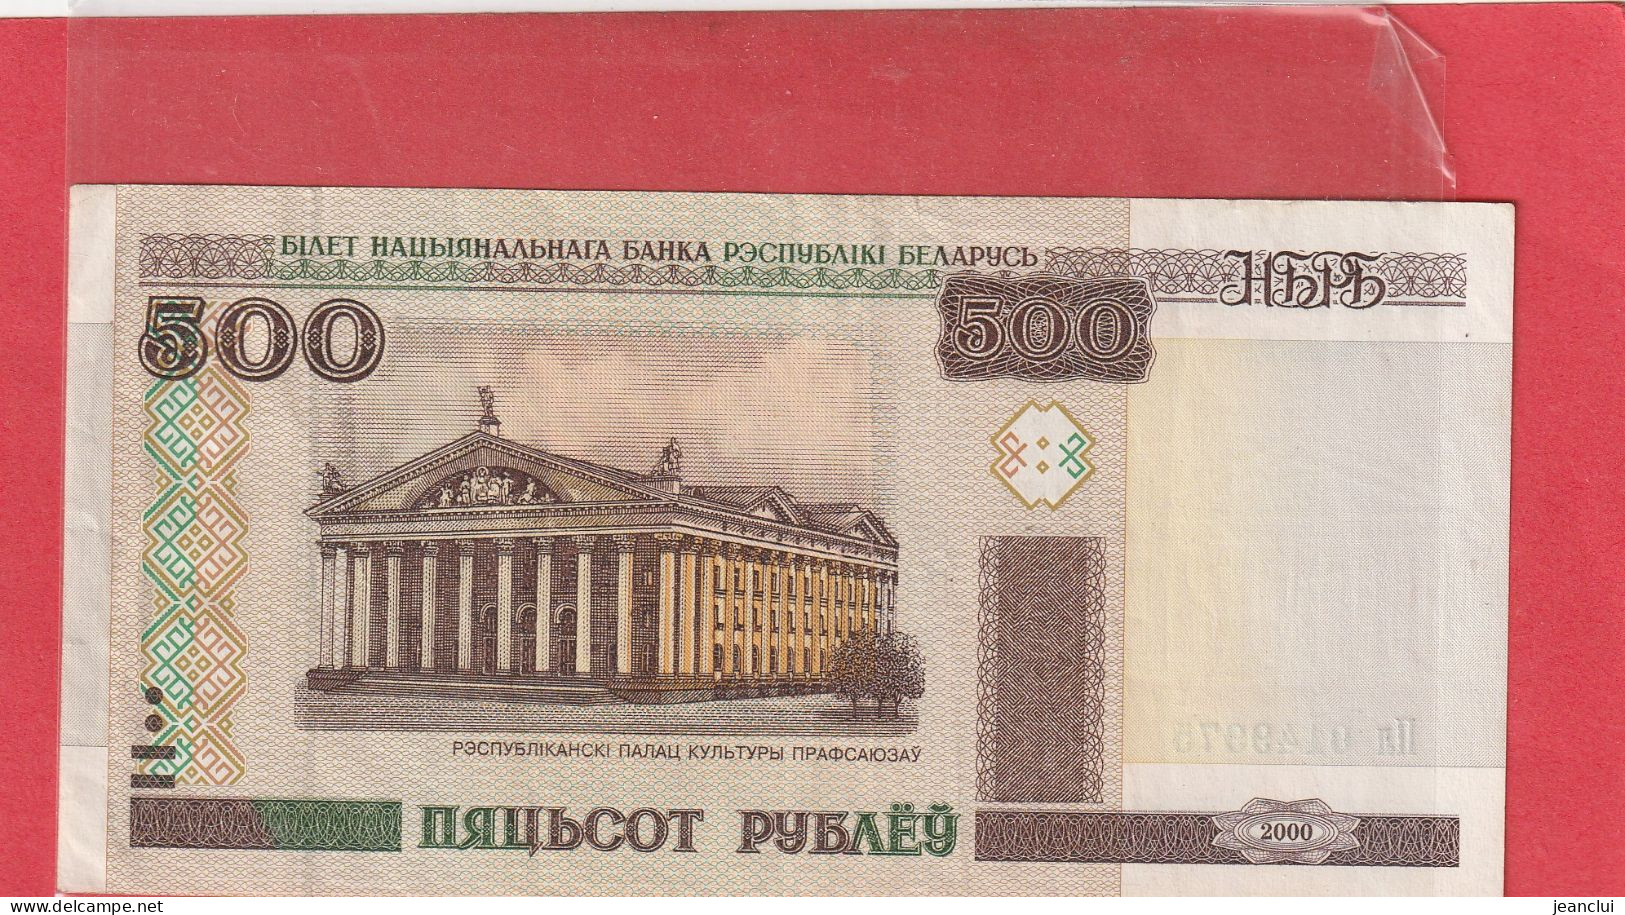 BELARUS  .  500 RUBLES  .  2000  .  N°  0149975  .  BILLET USITE  .  2  SCANNES - Belarus